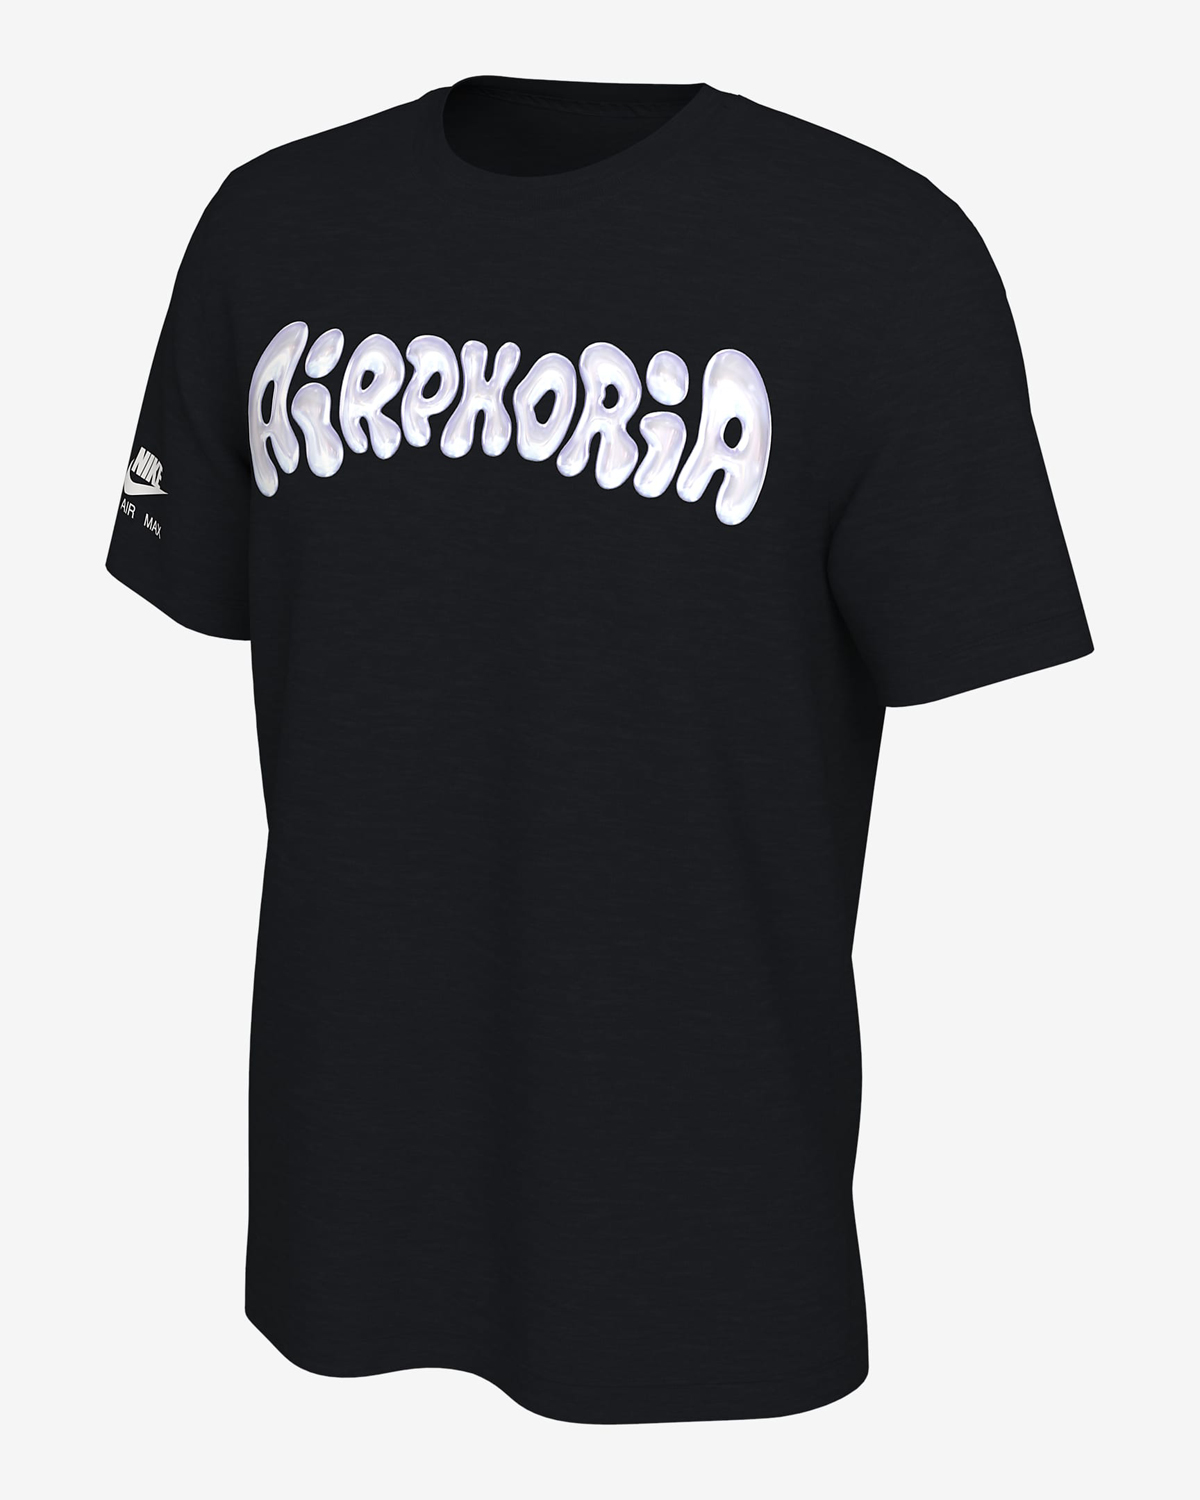 Nike-Fortnite-Airphoria-T-Shirt-Black-1